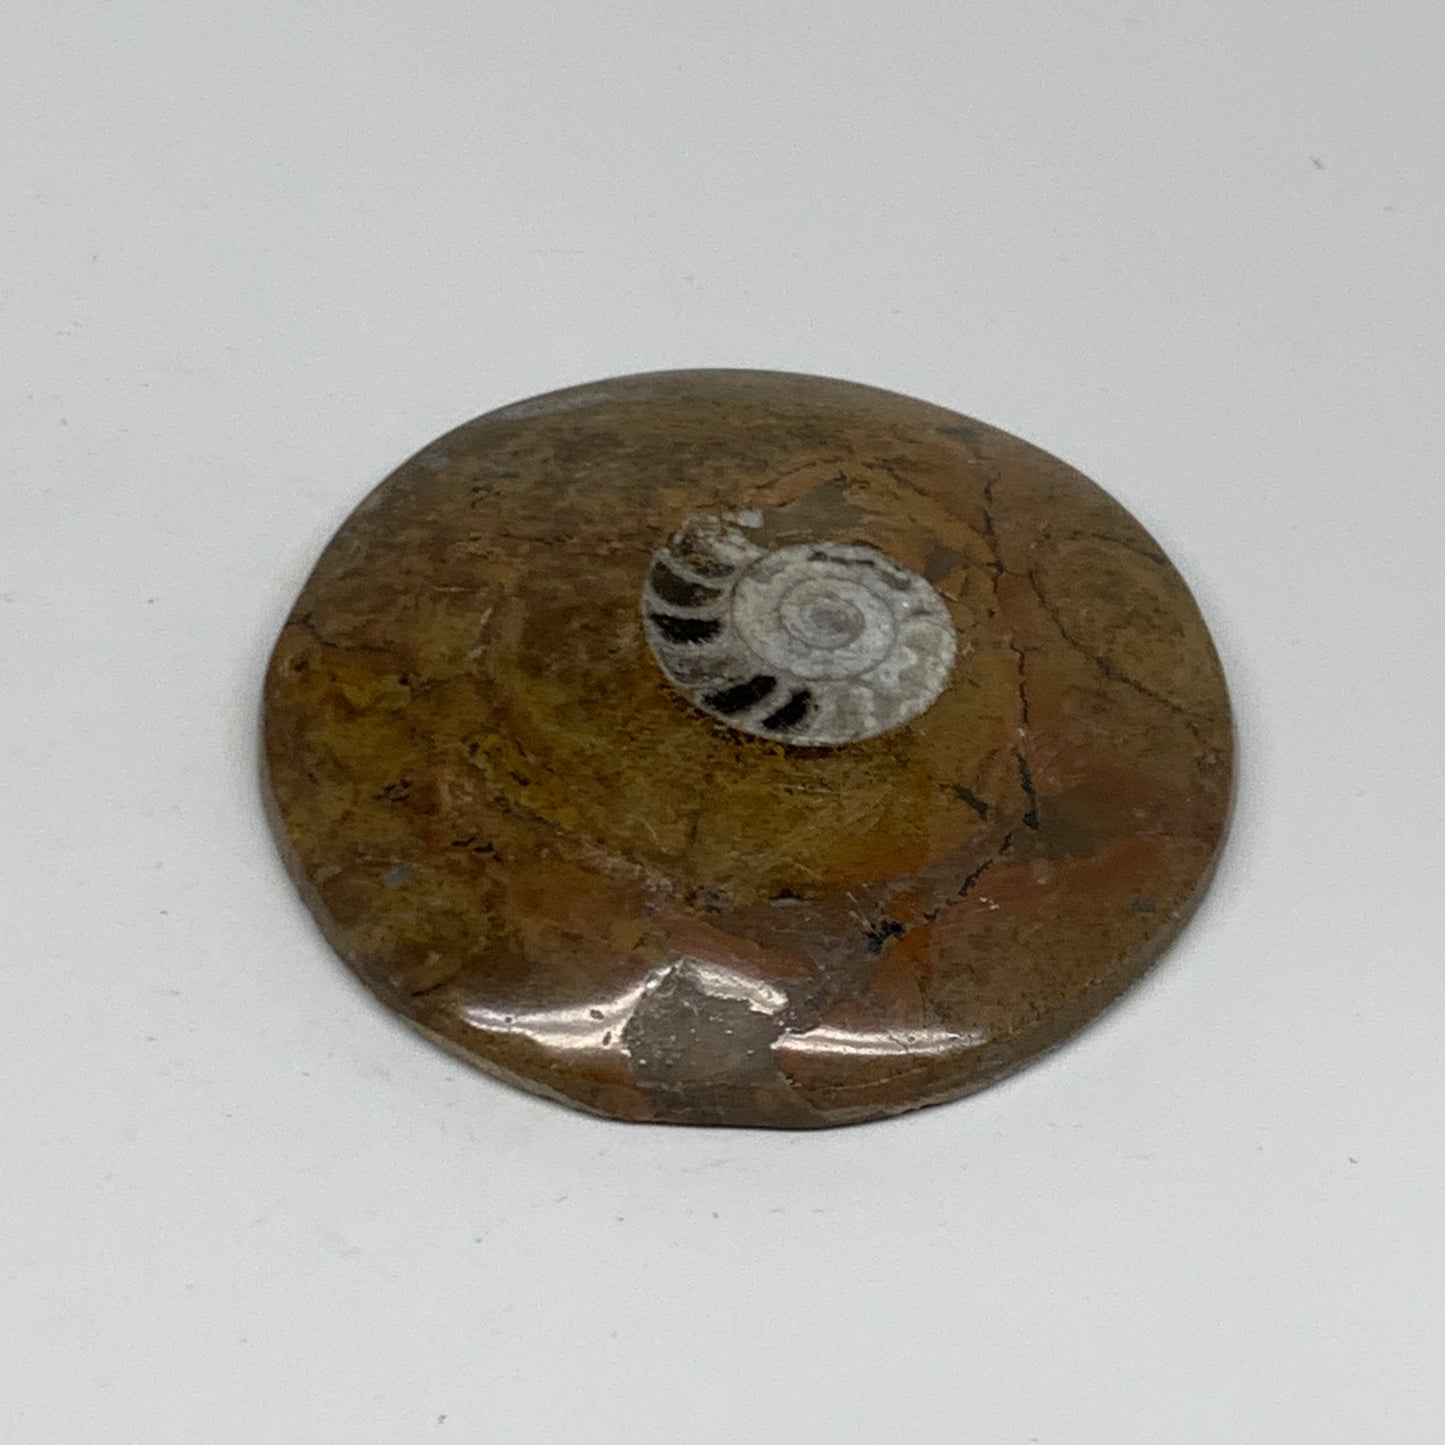 129.5g, 3.2"x3.2"x0.6", Goniatite (Button) Ammonite Polished Fossils, B30080